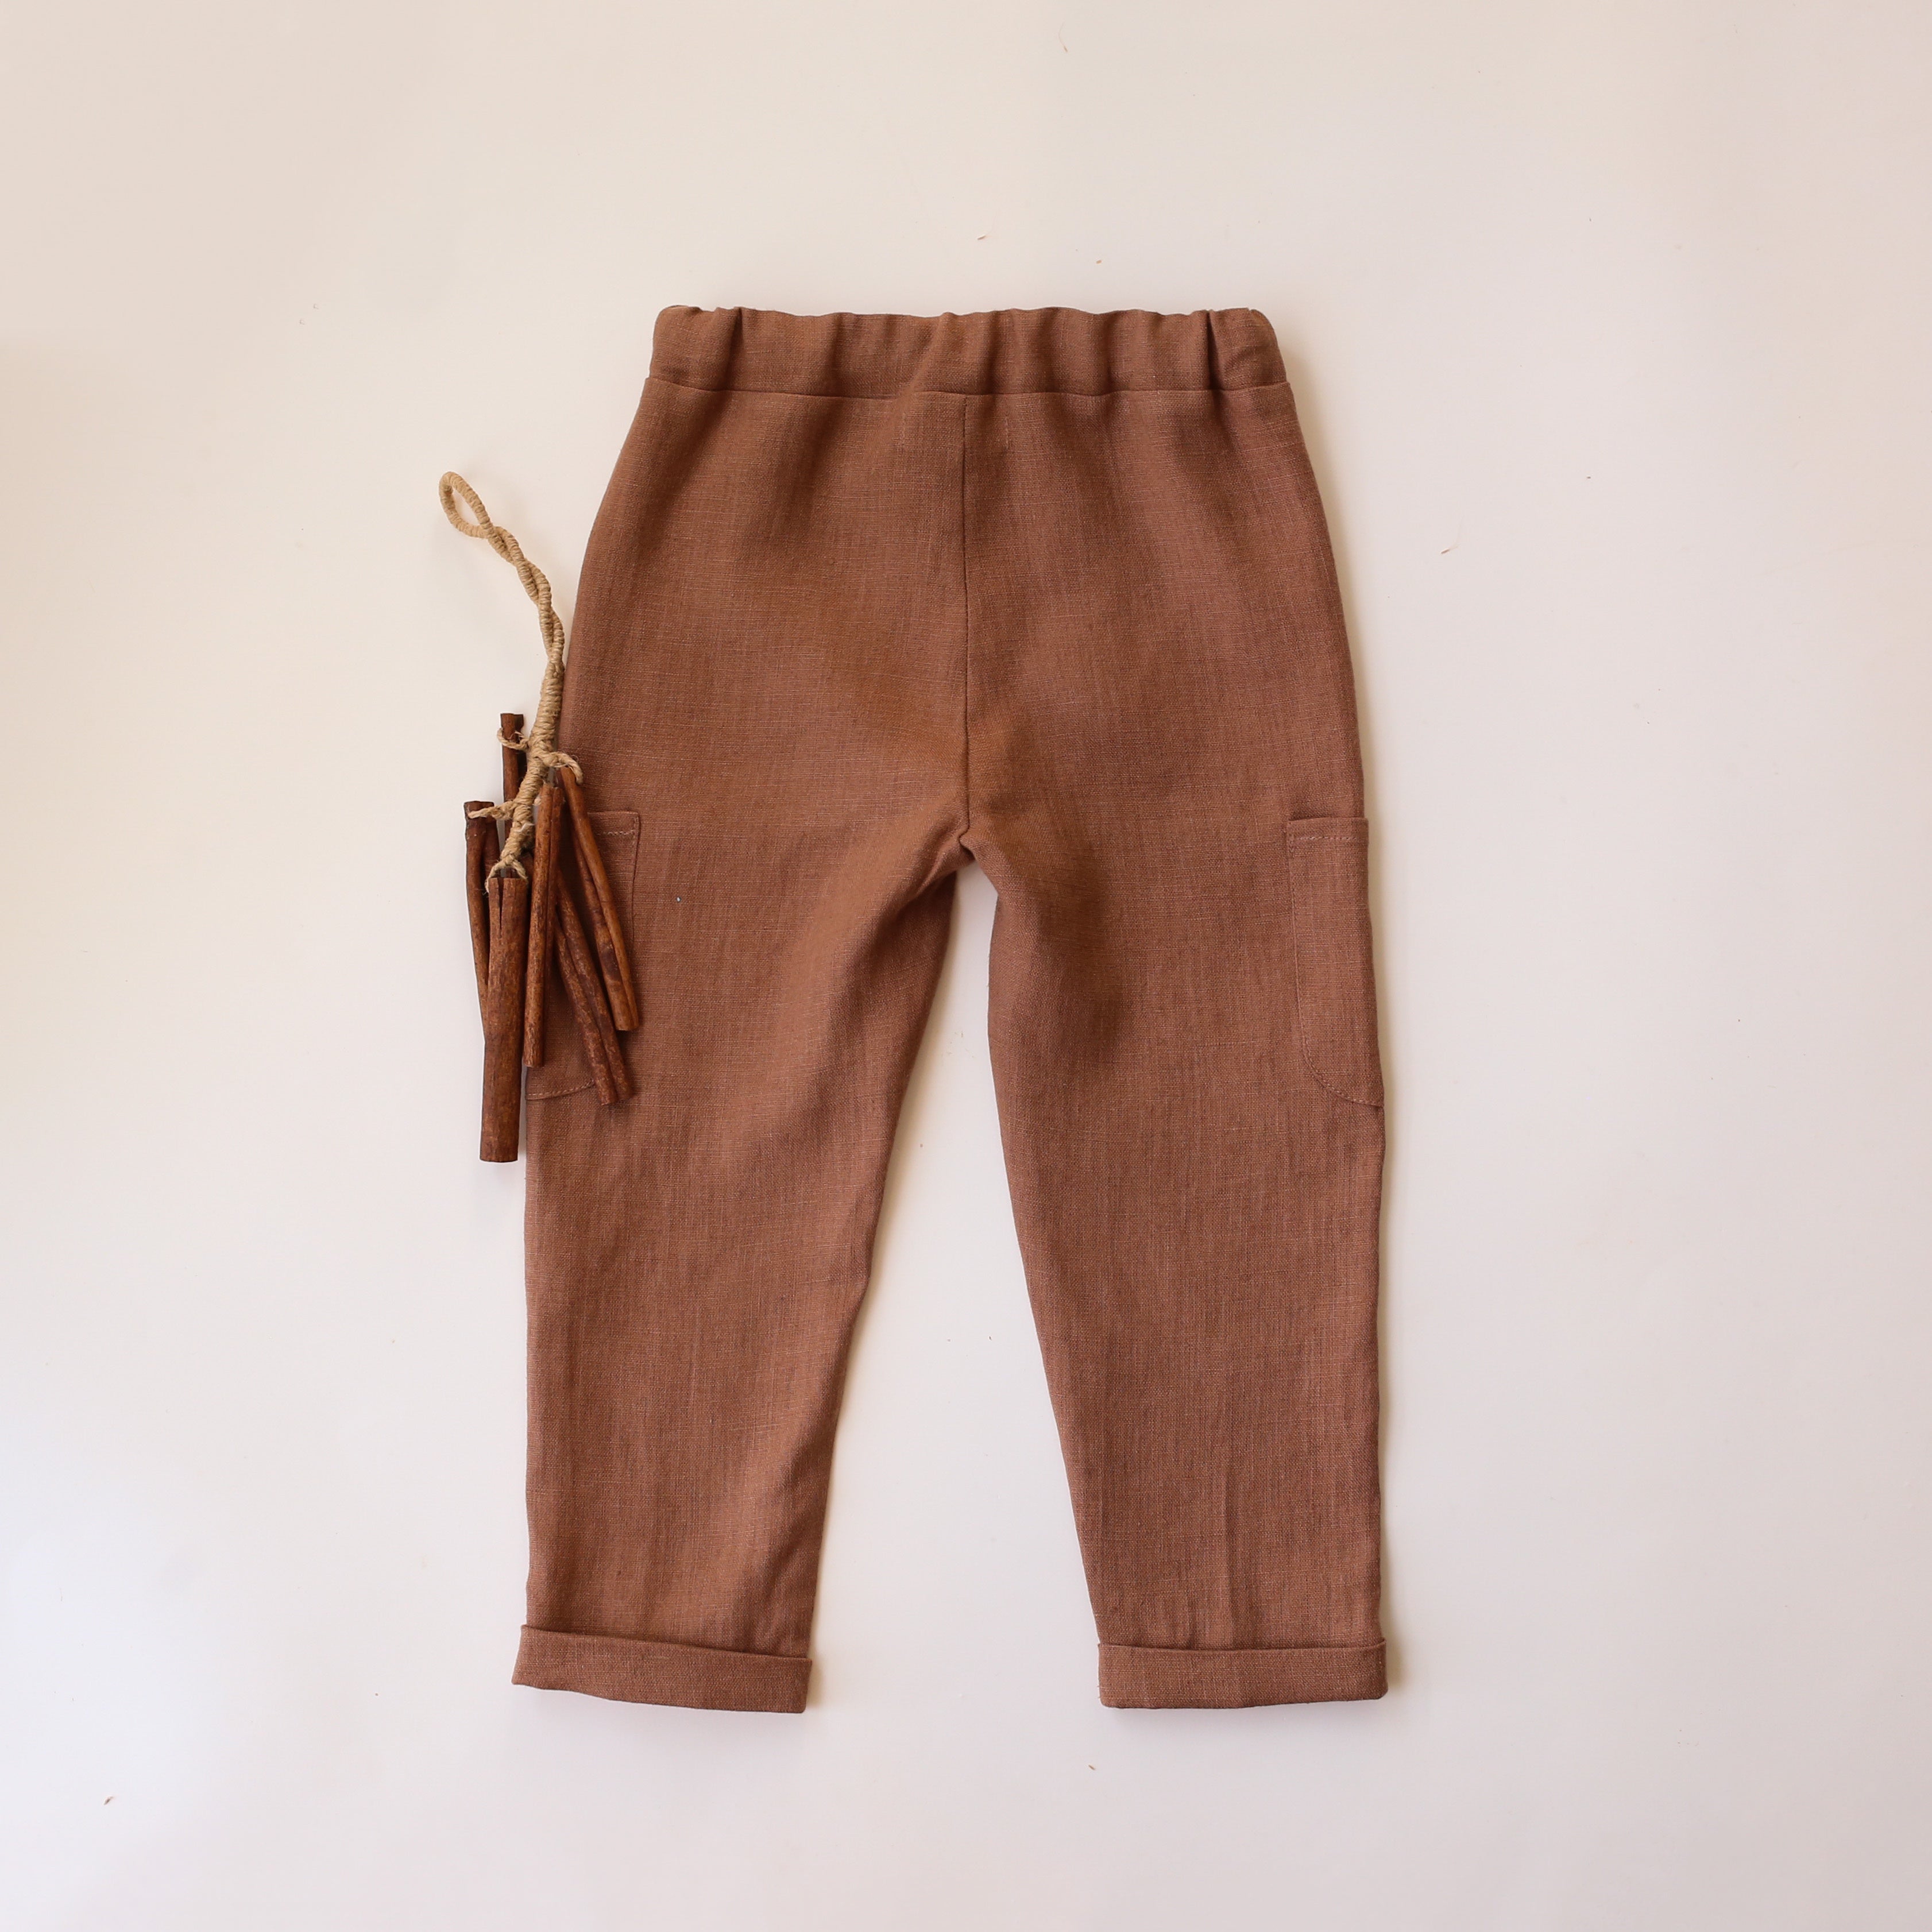 Cocoa Brown Linen Pocket Pants